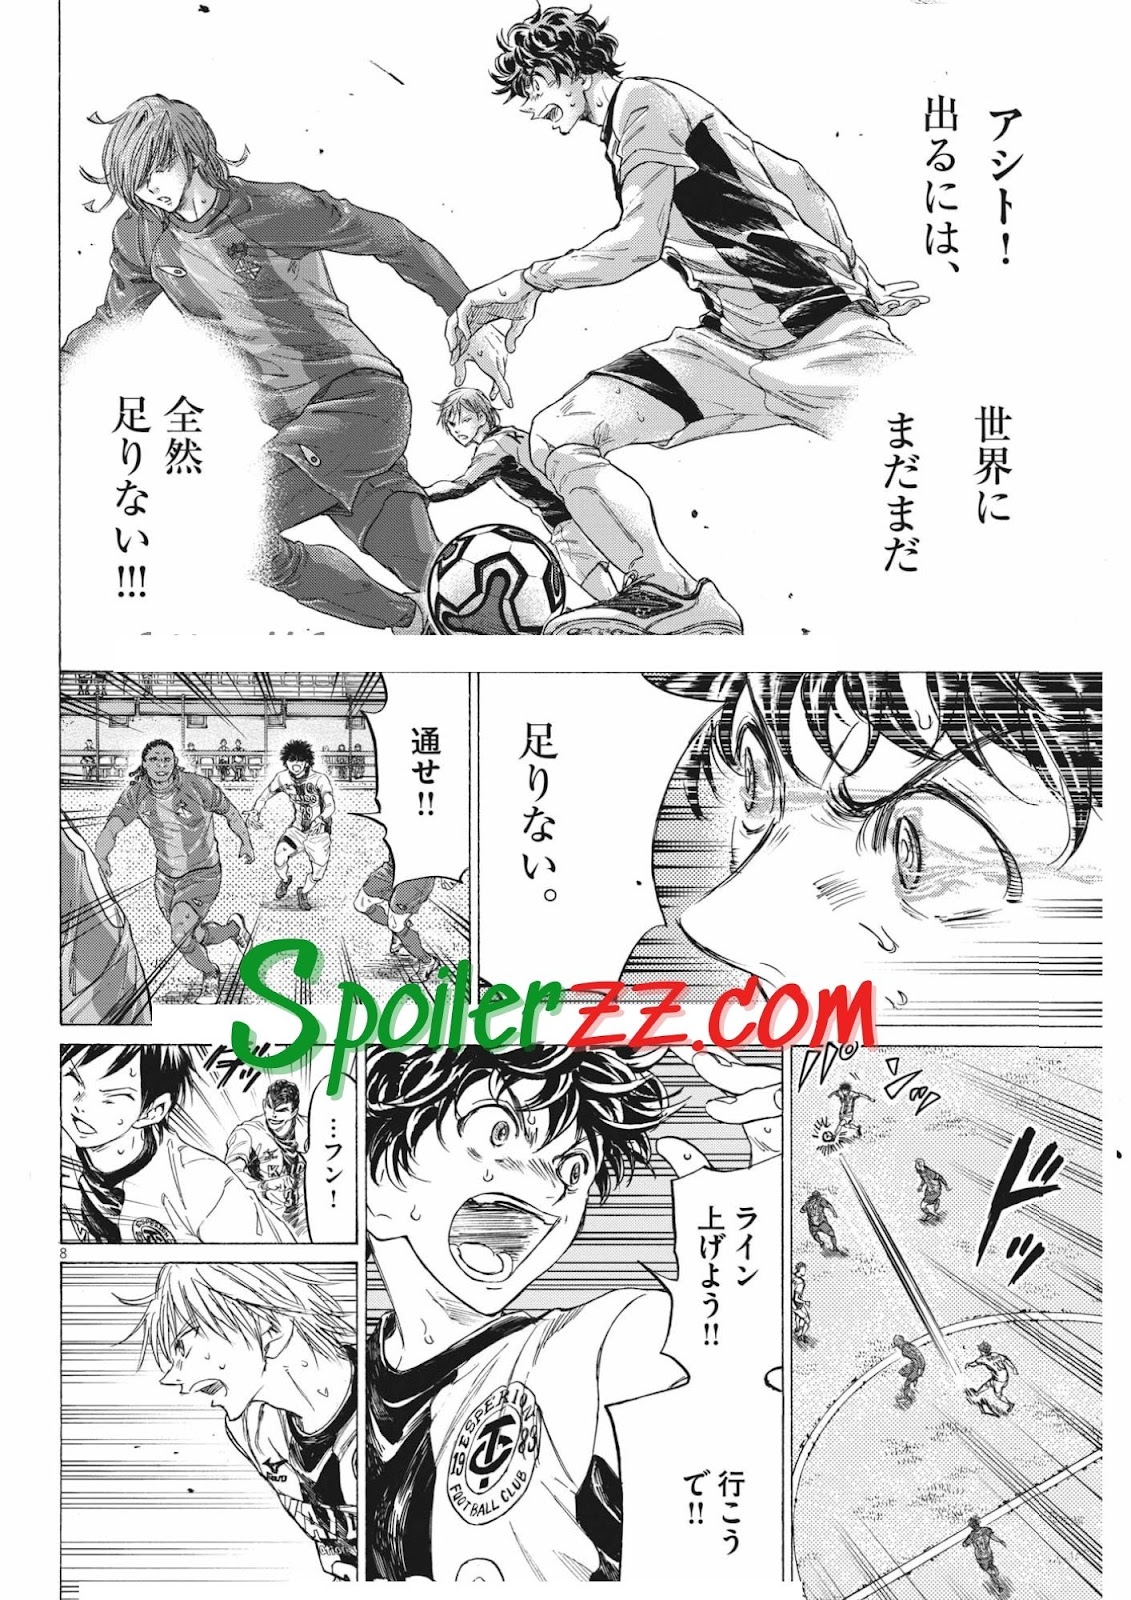 MANGA AO ASHI 352 ENGLISH FULL CHAPTER - 漫画 『アオアシ』 日本語 ao ashi